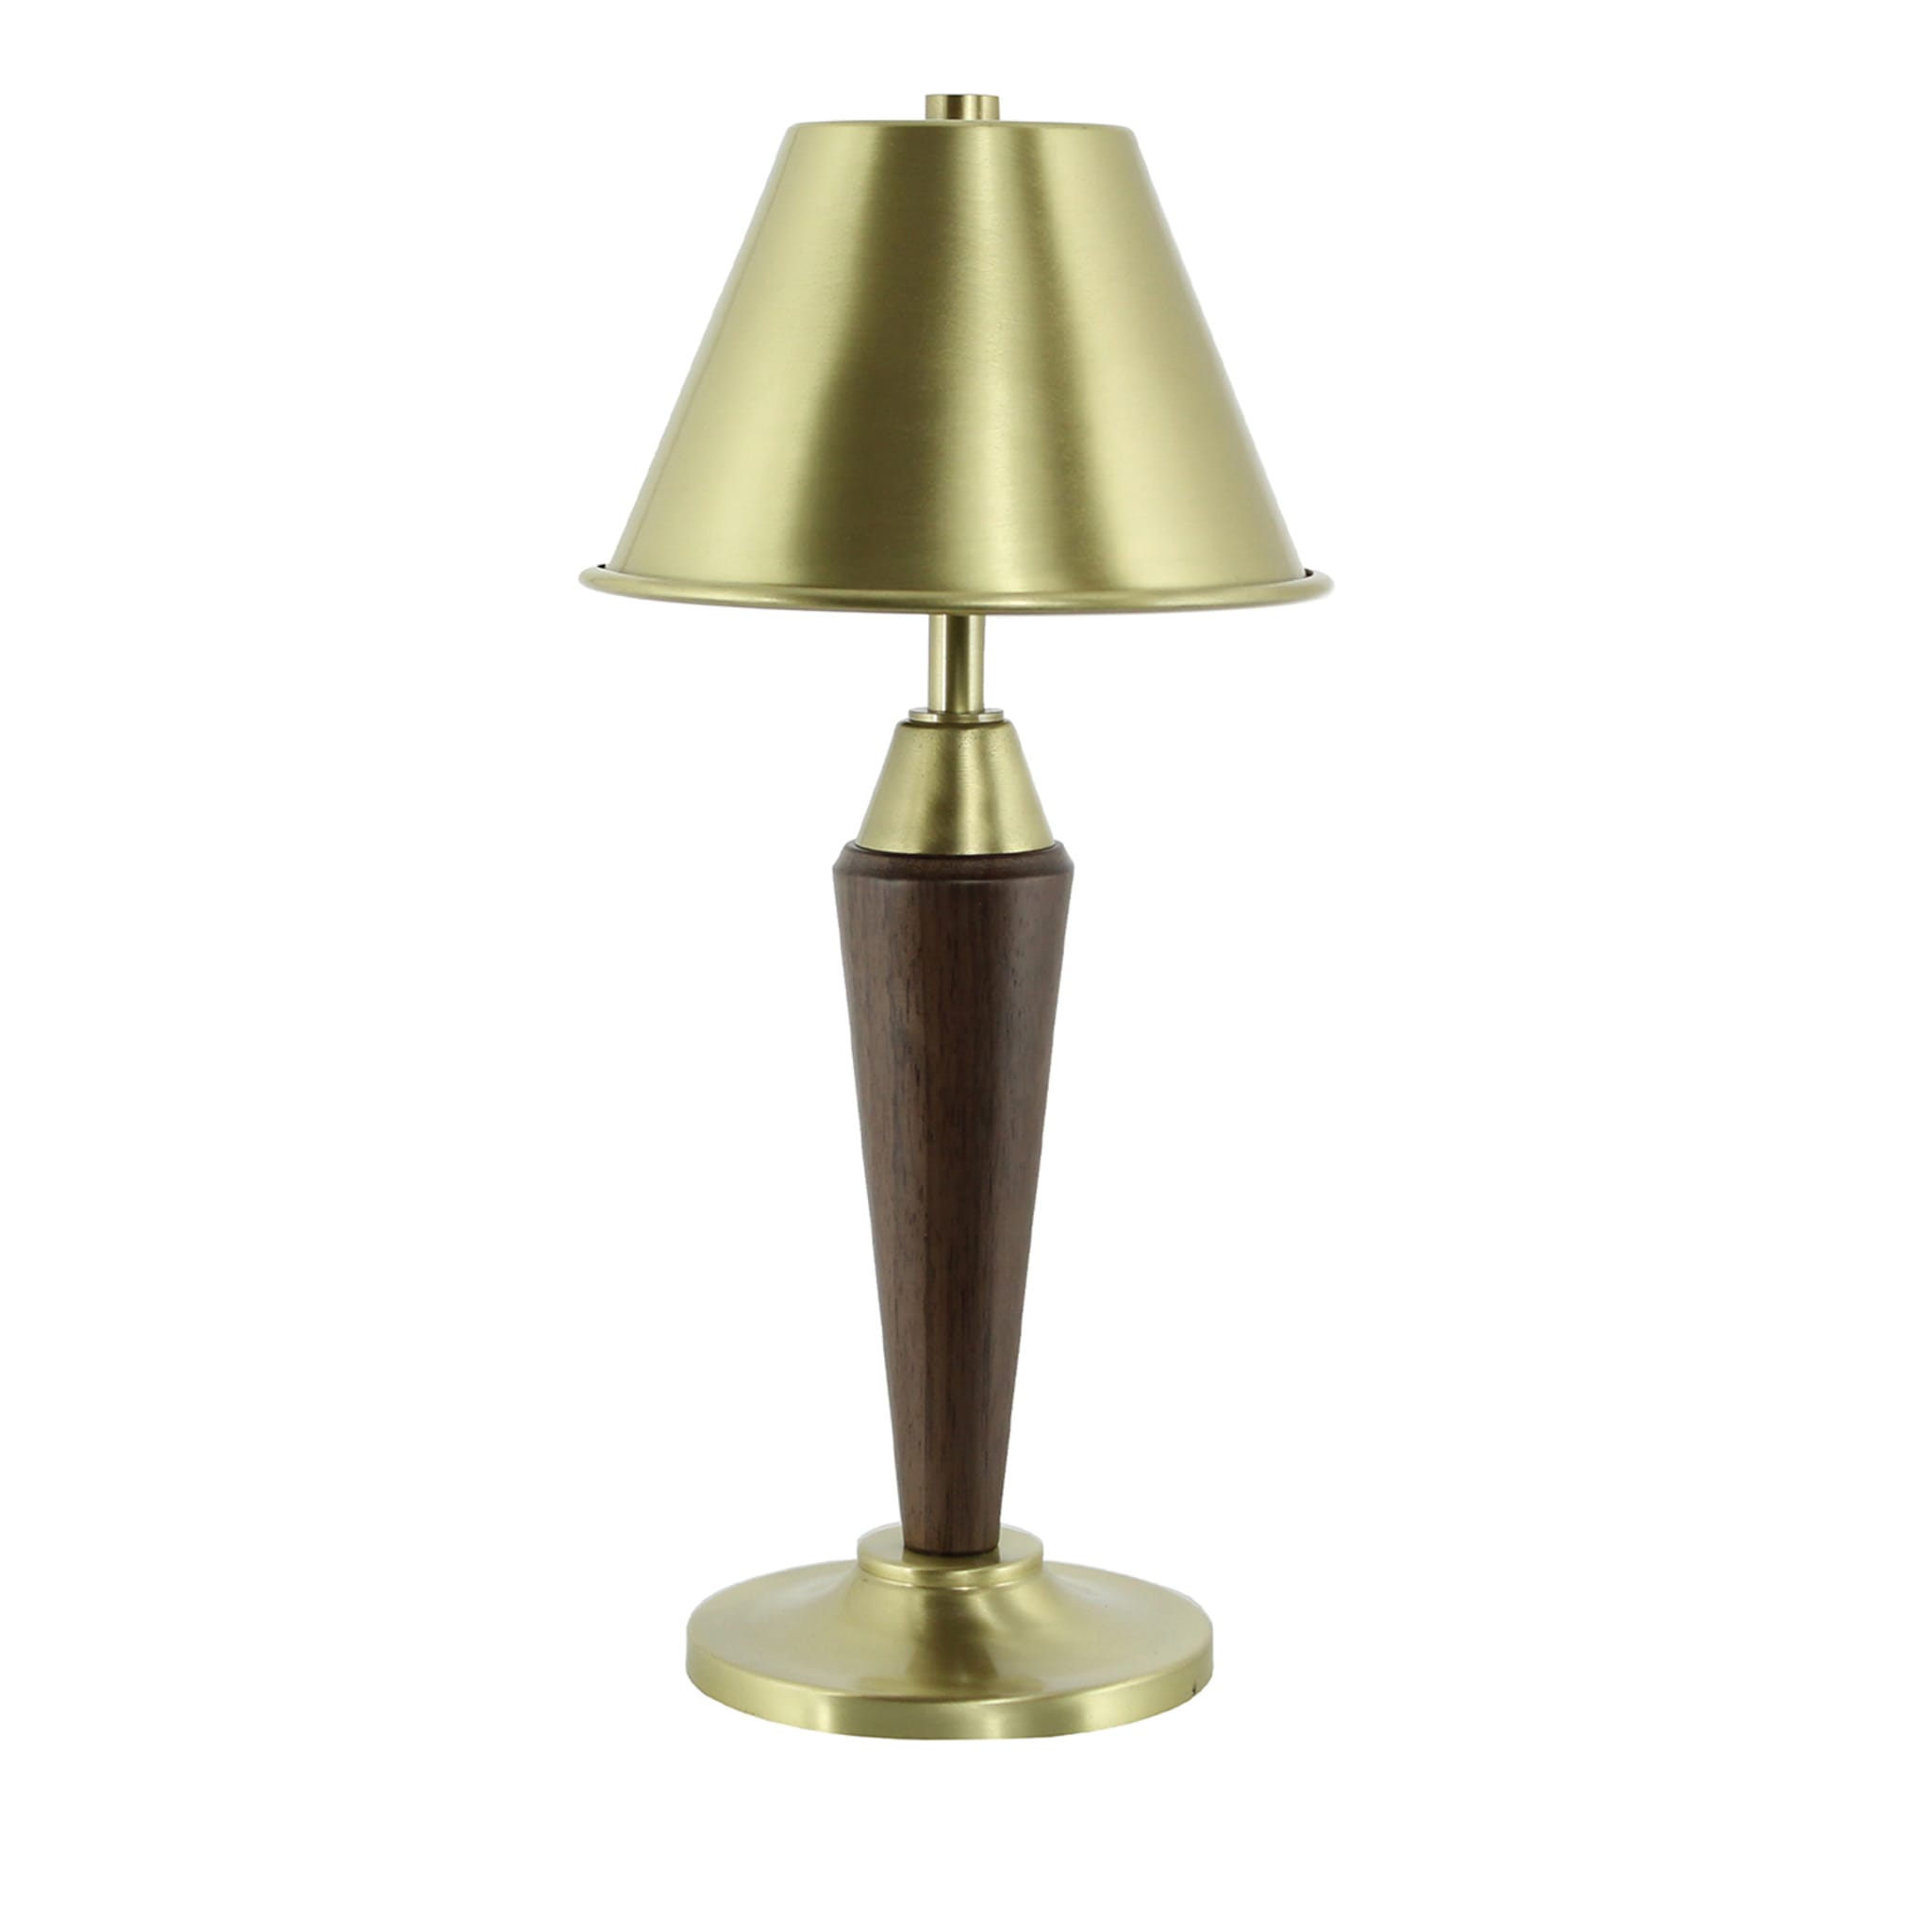 Alena OS Walnut Table Lamp by Studio Sagrada - Main view